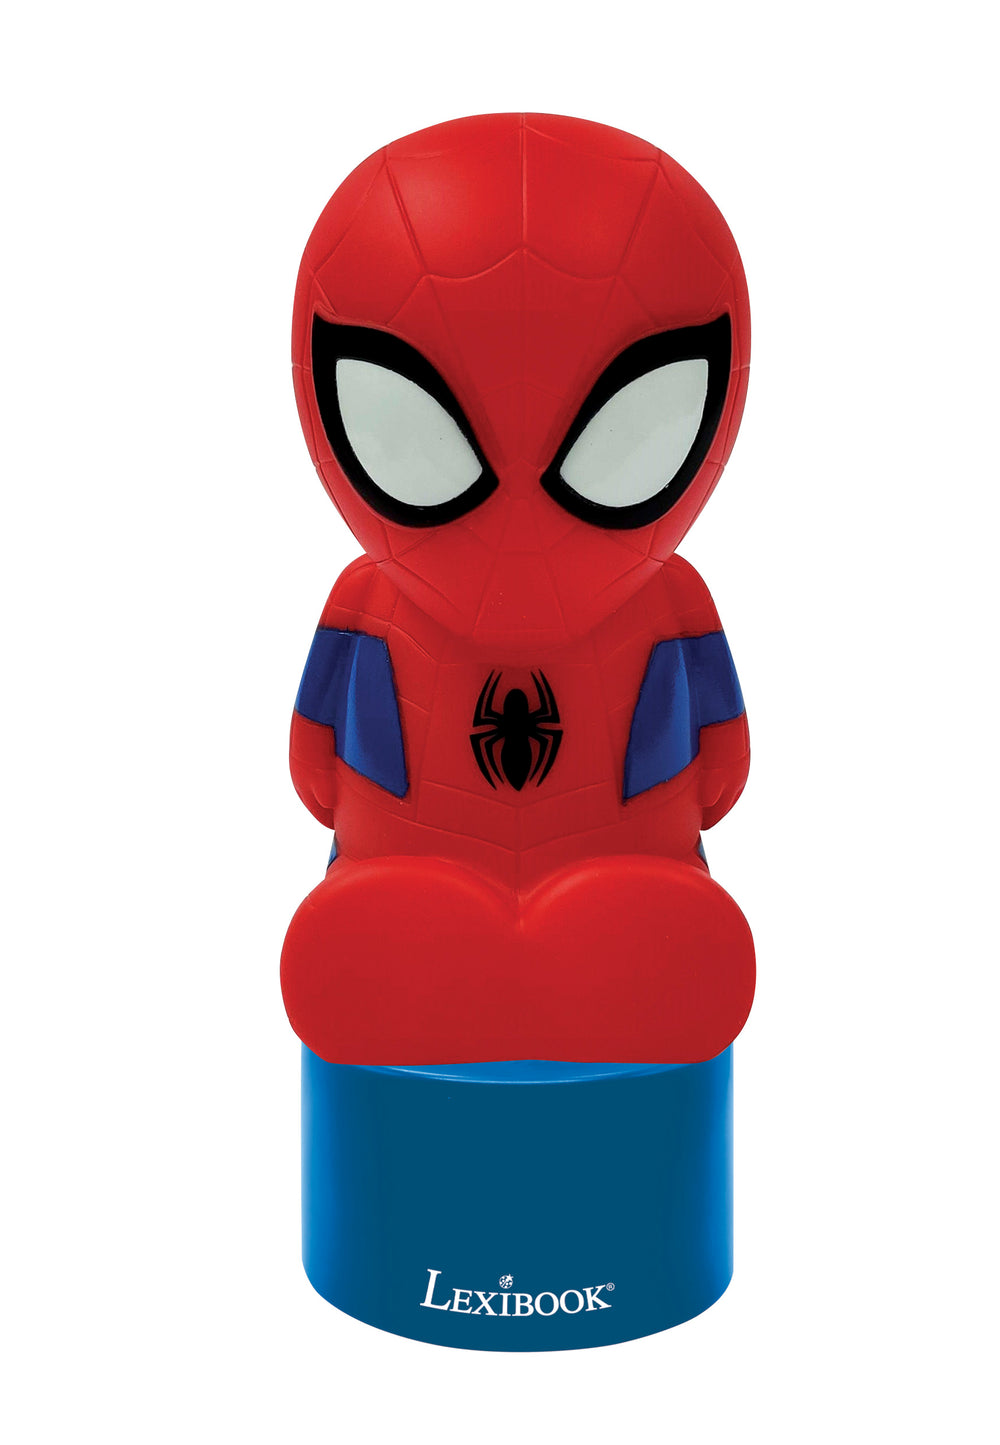 Marvel Spider-Man LED Nightlight and Speaker - Red and Blue